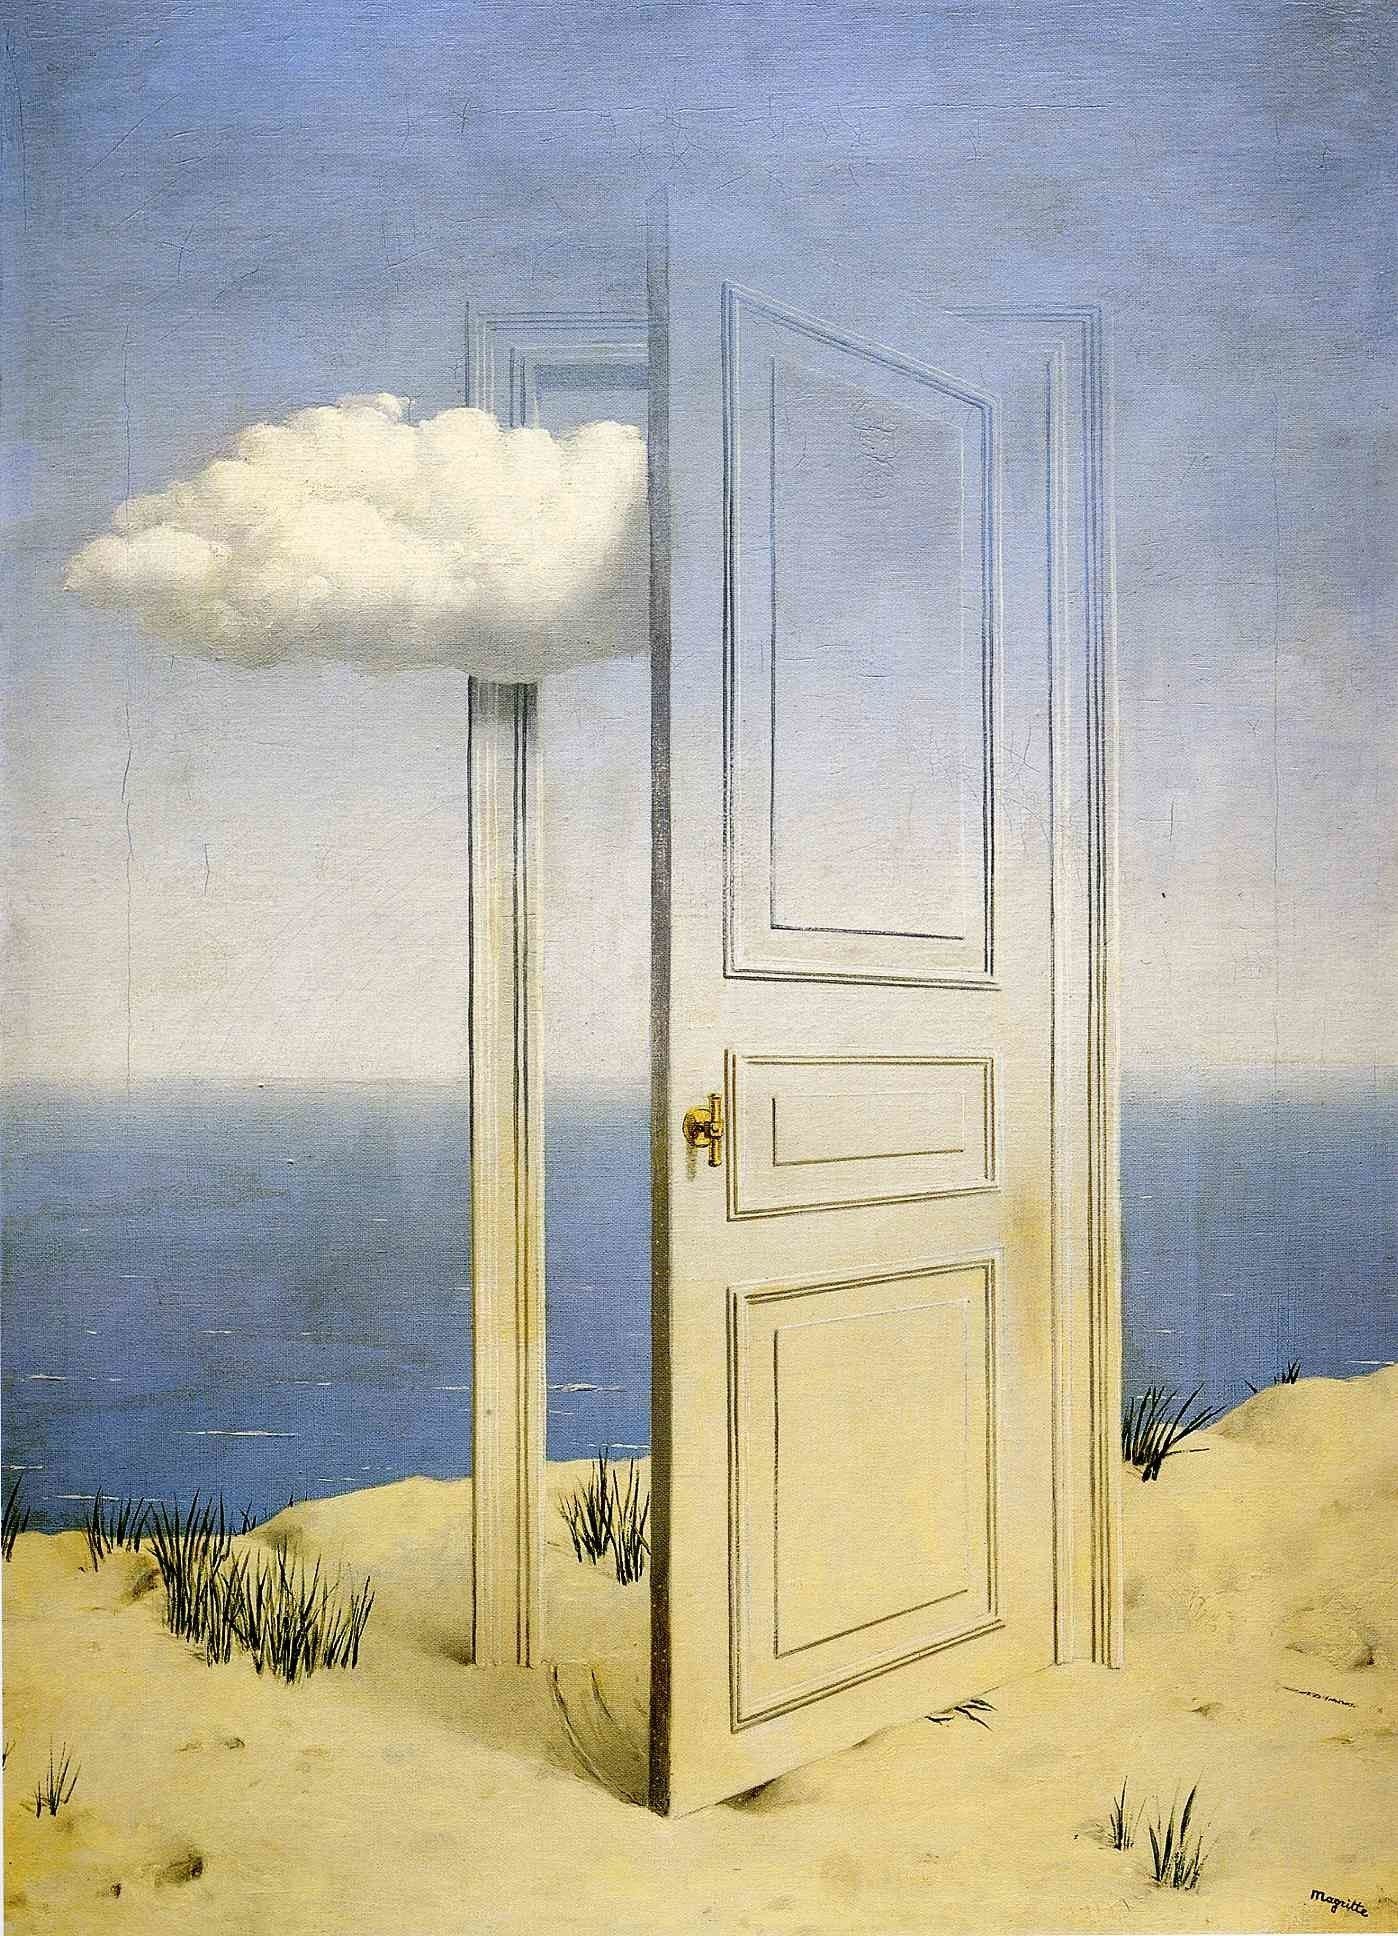 René Magritte Wallpaper Free René Magritte Background